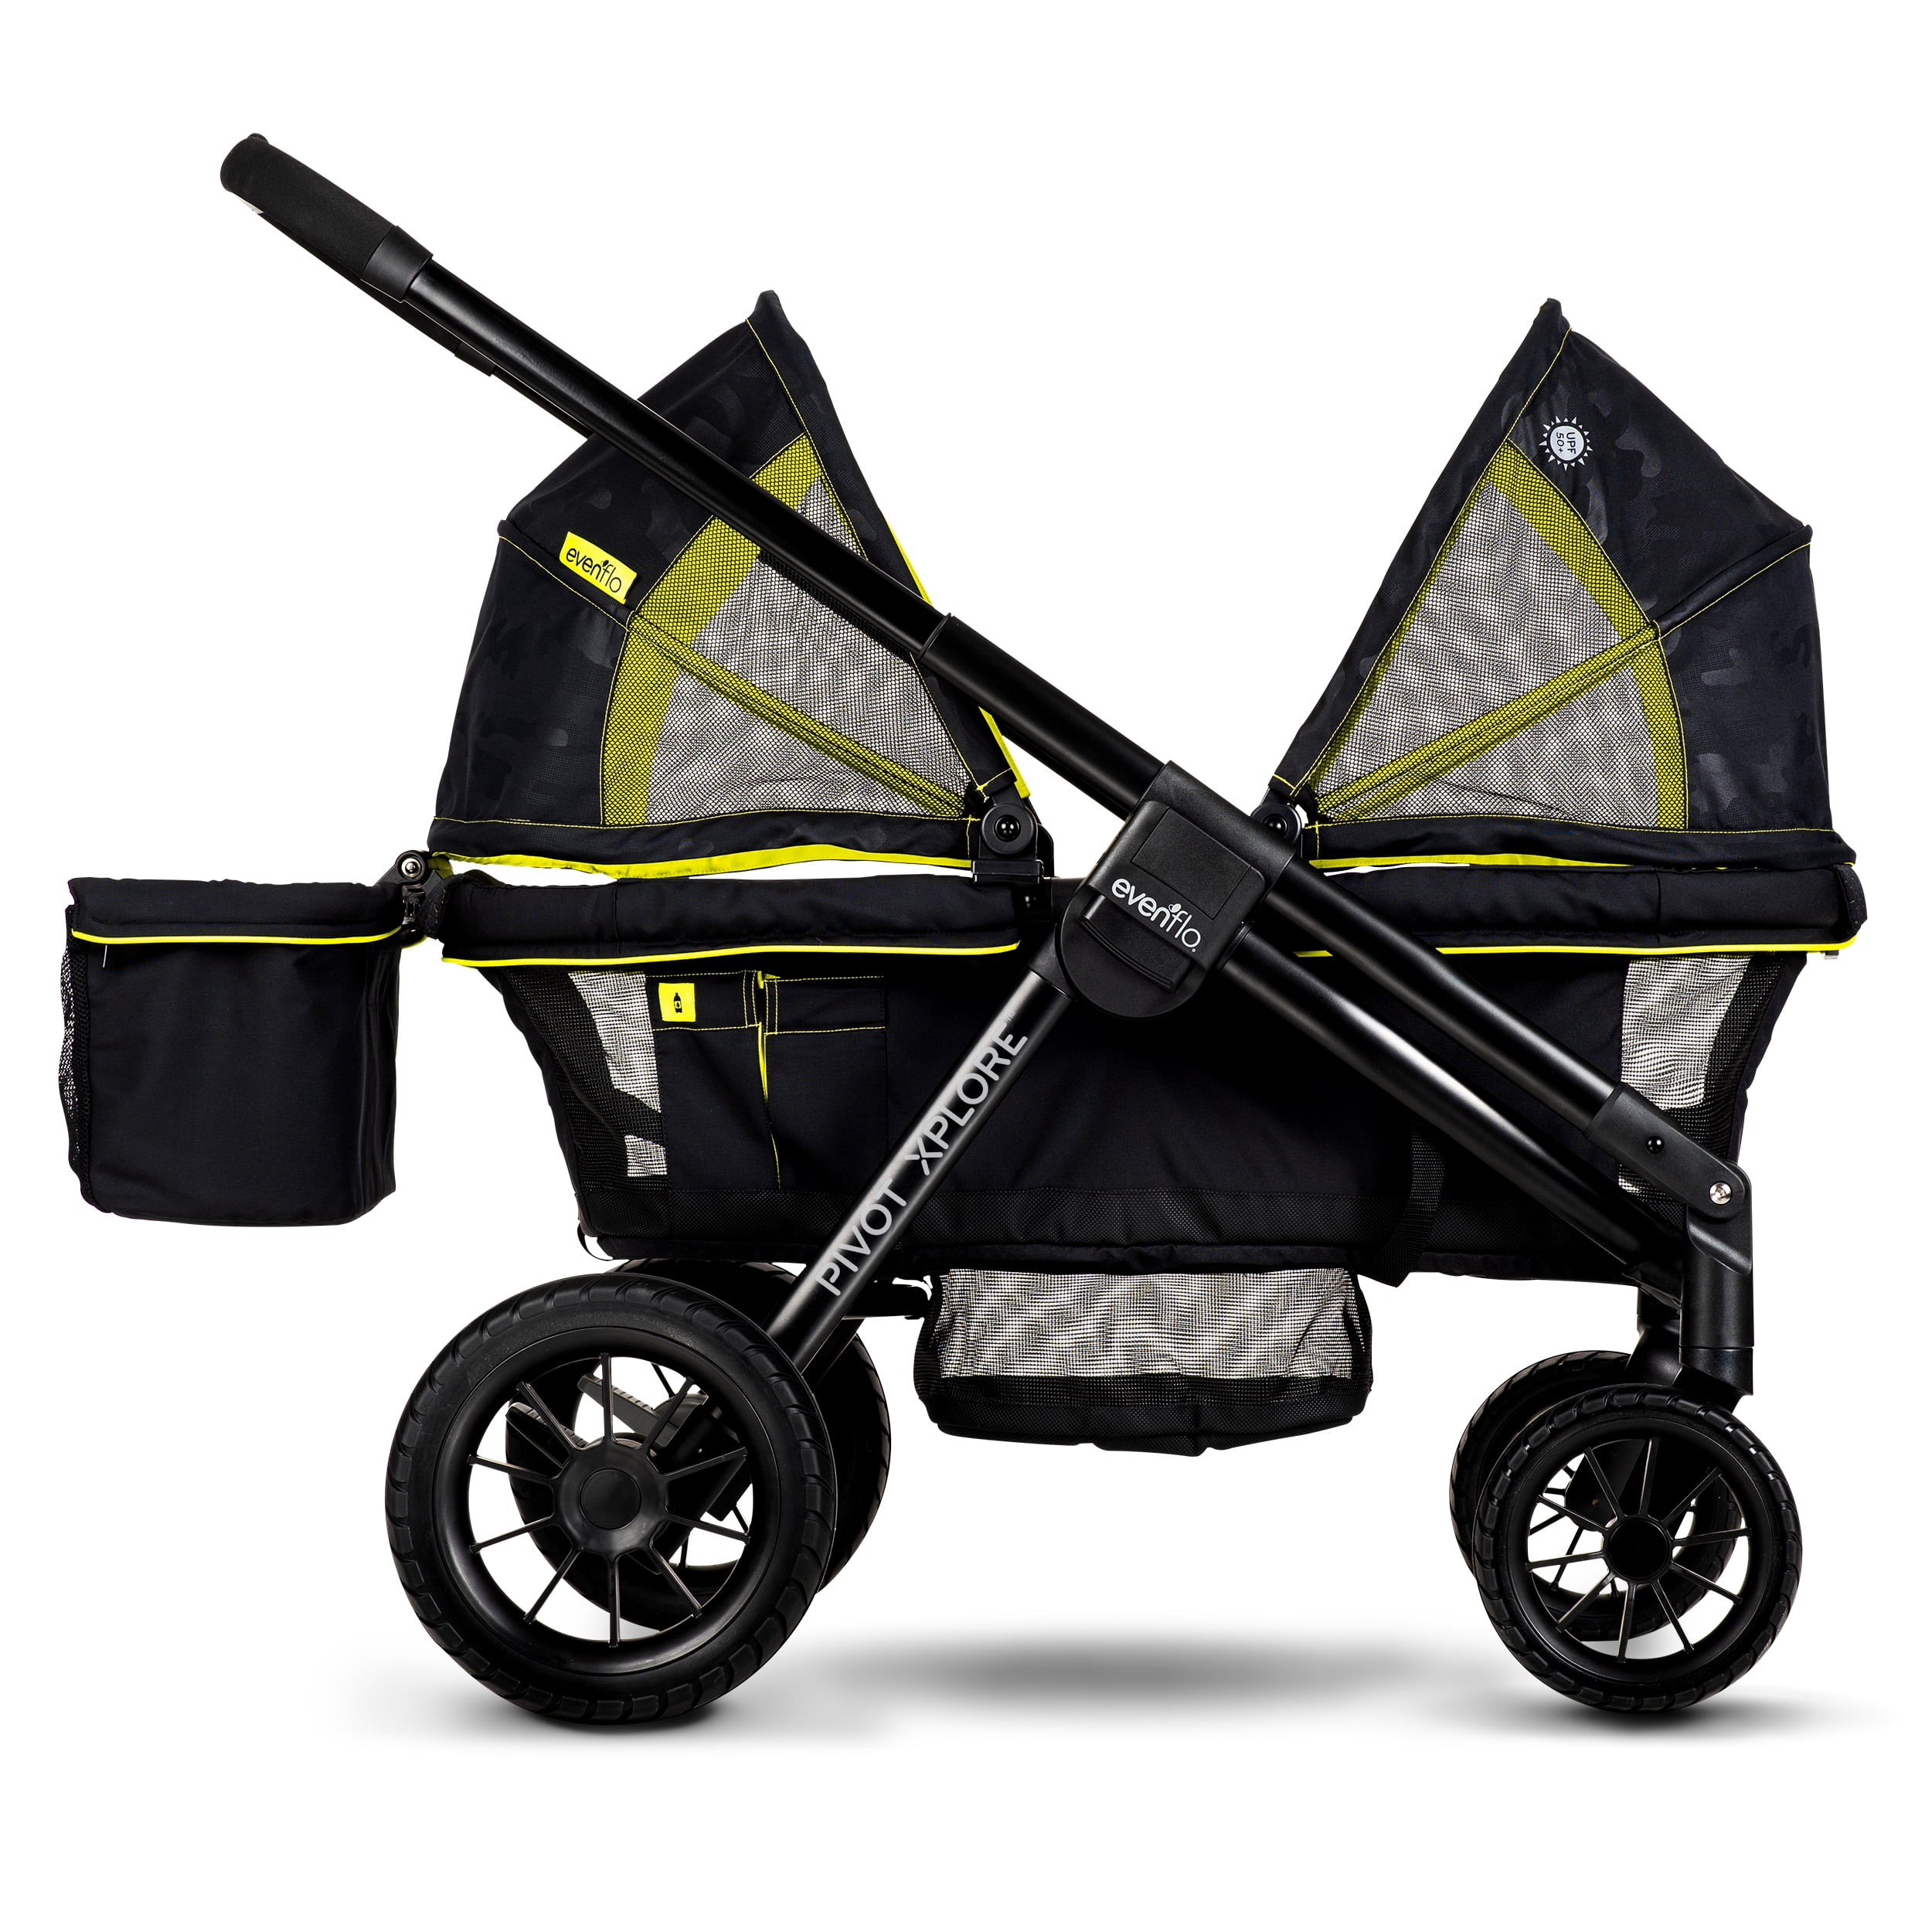 foldable baby wagon